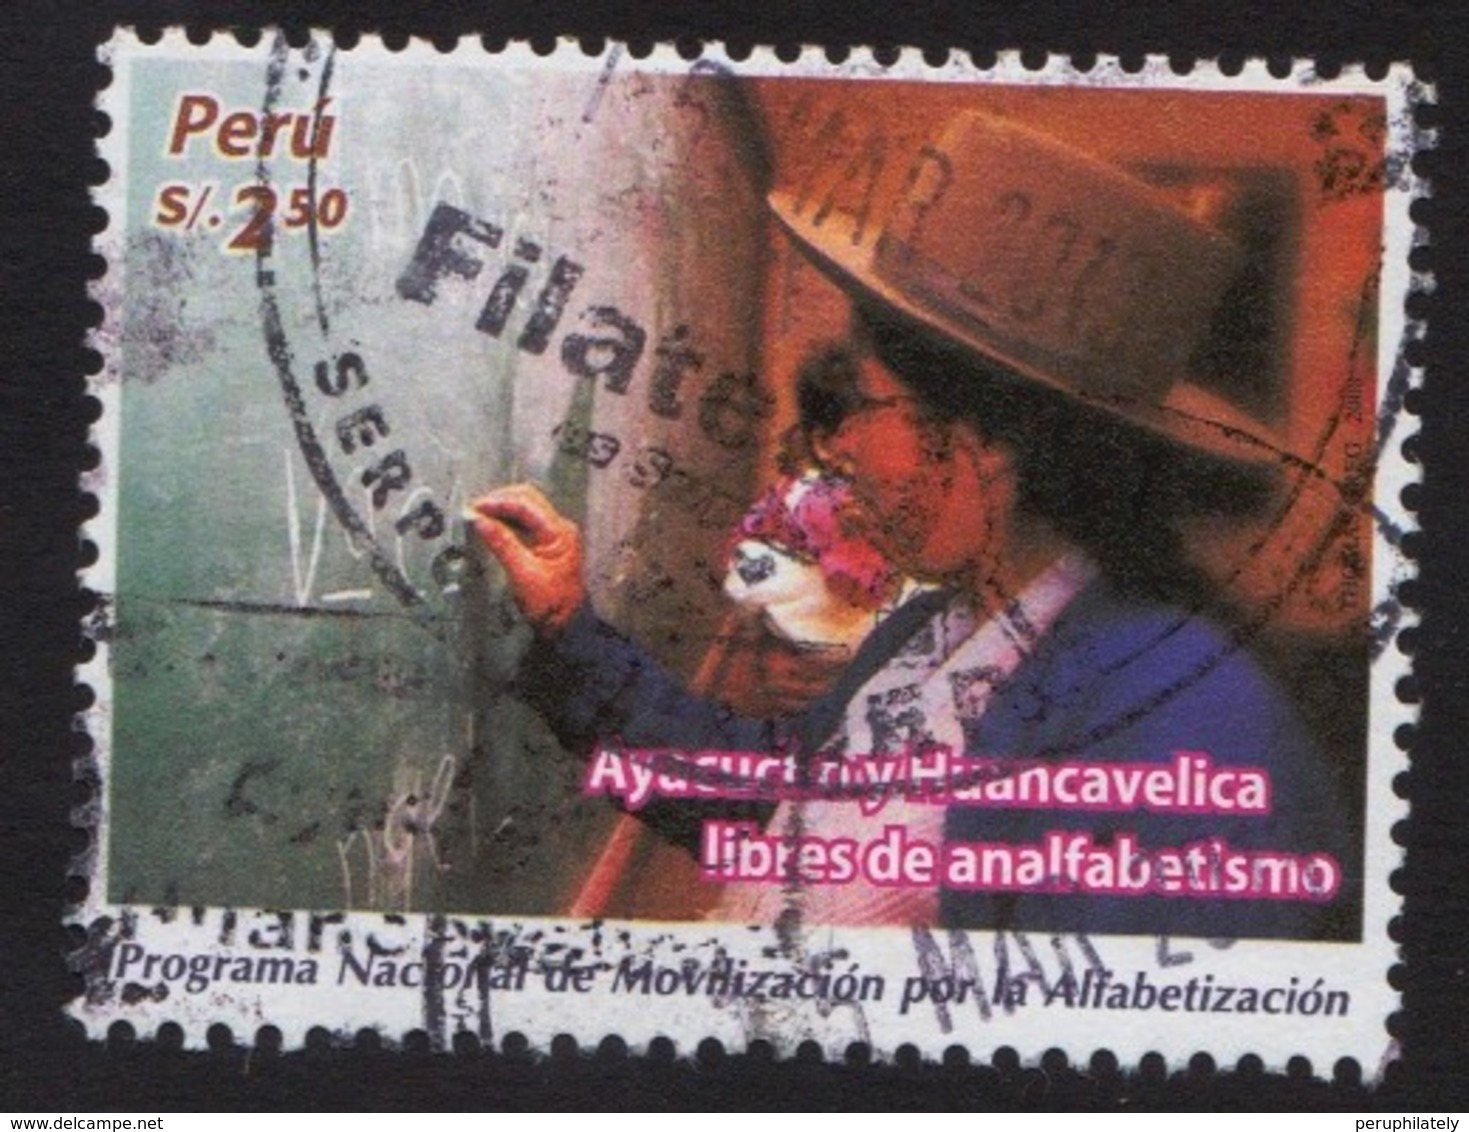 Peru 2008 - Literacy,  Alfabetizacion, 1v, Used - Peru